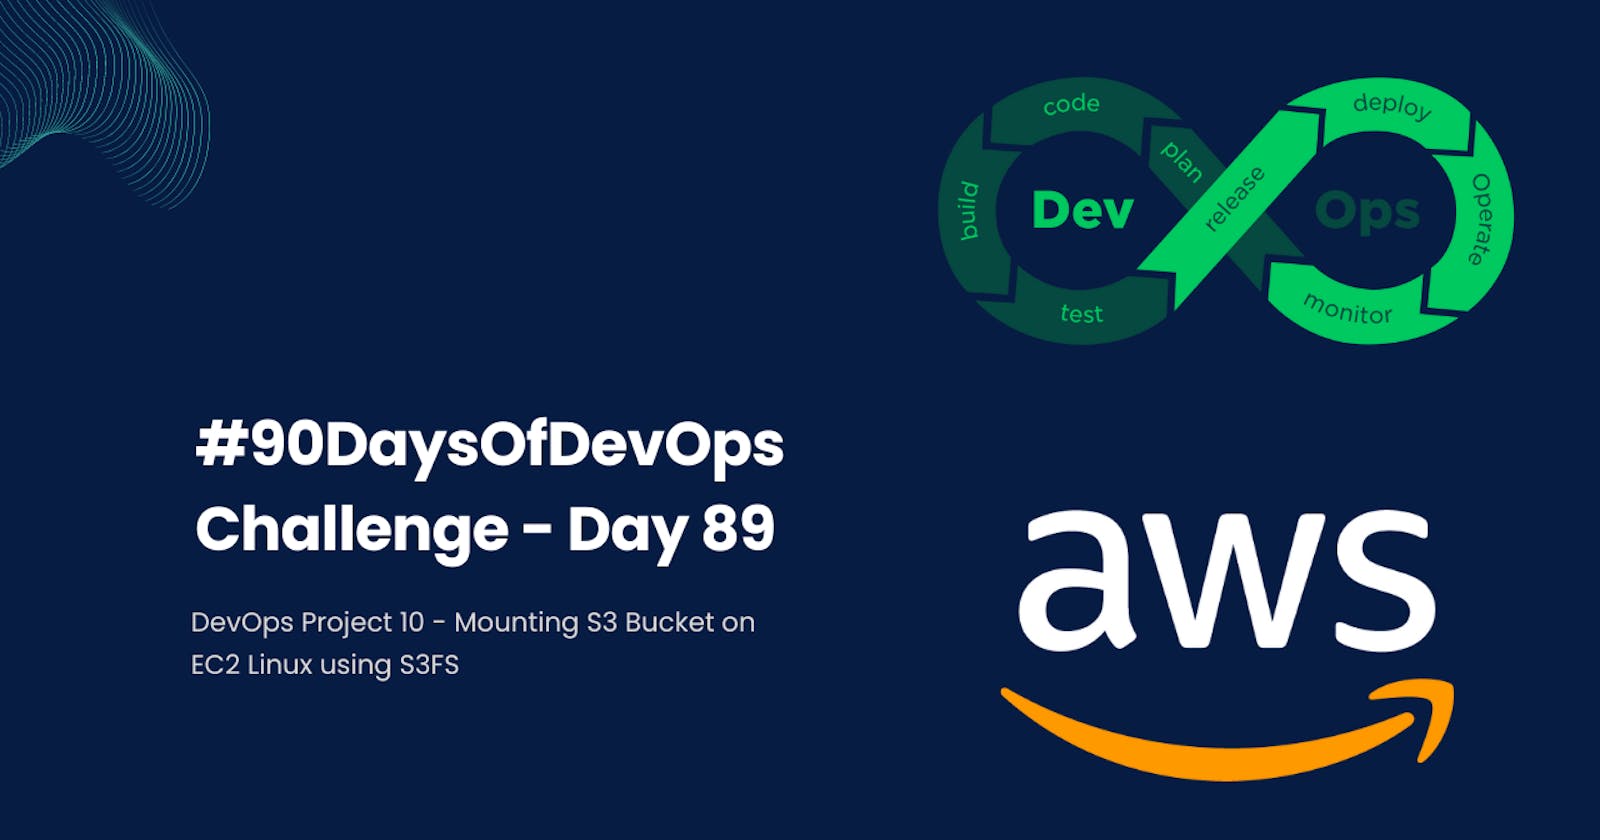 #90DaysOfDevOps Challenge - Day 89 - DevOps Project 10 - Mounting S3 Bucket on EC2 Linux using S3FS